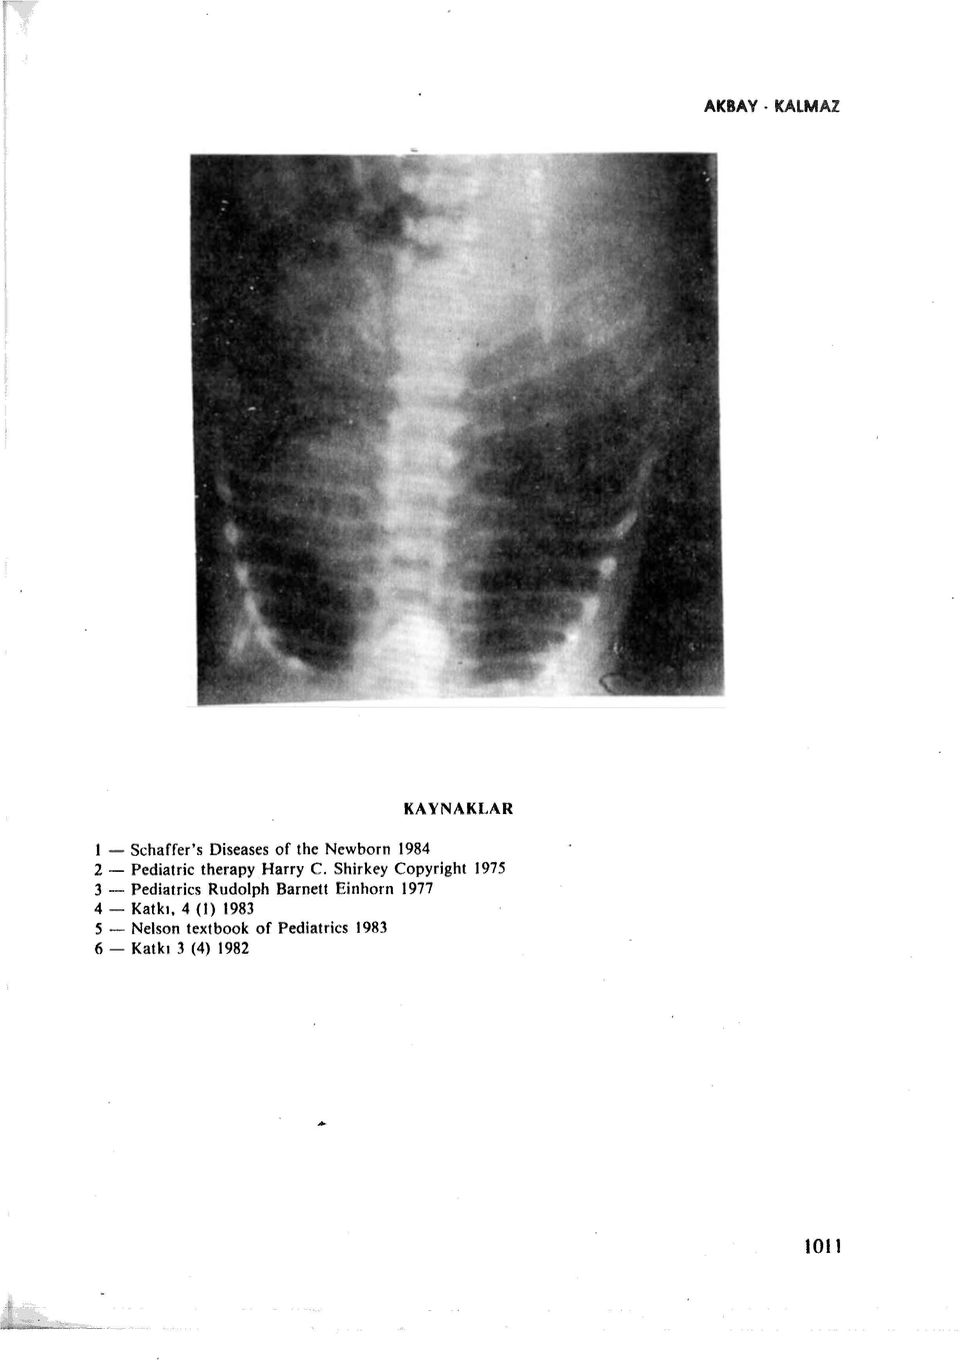 Shirkey Copyright l 975 3 - Pediatrics Rudolph Barnett Einhorn